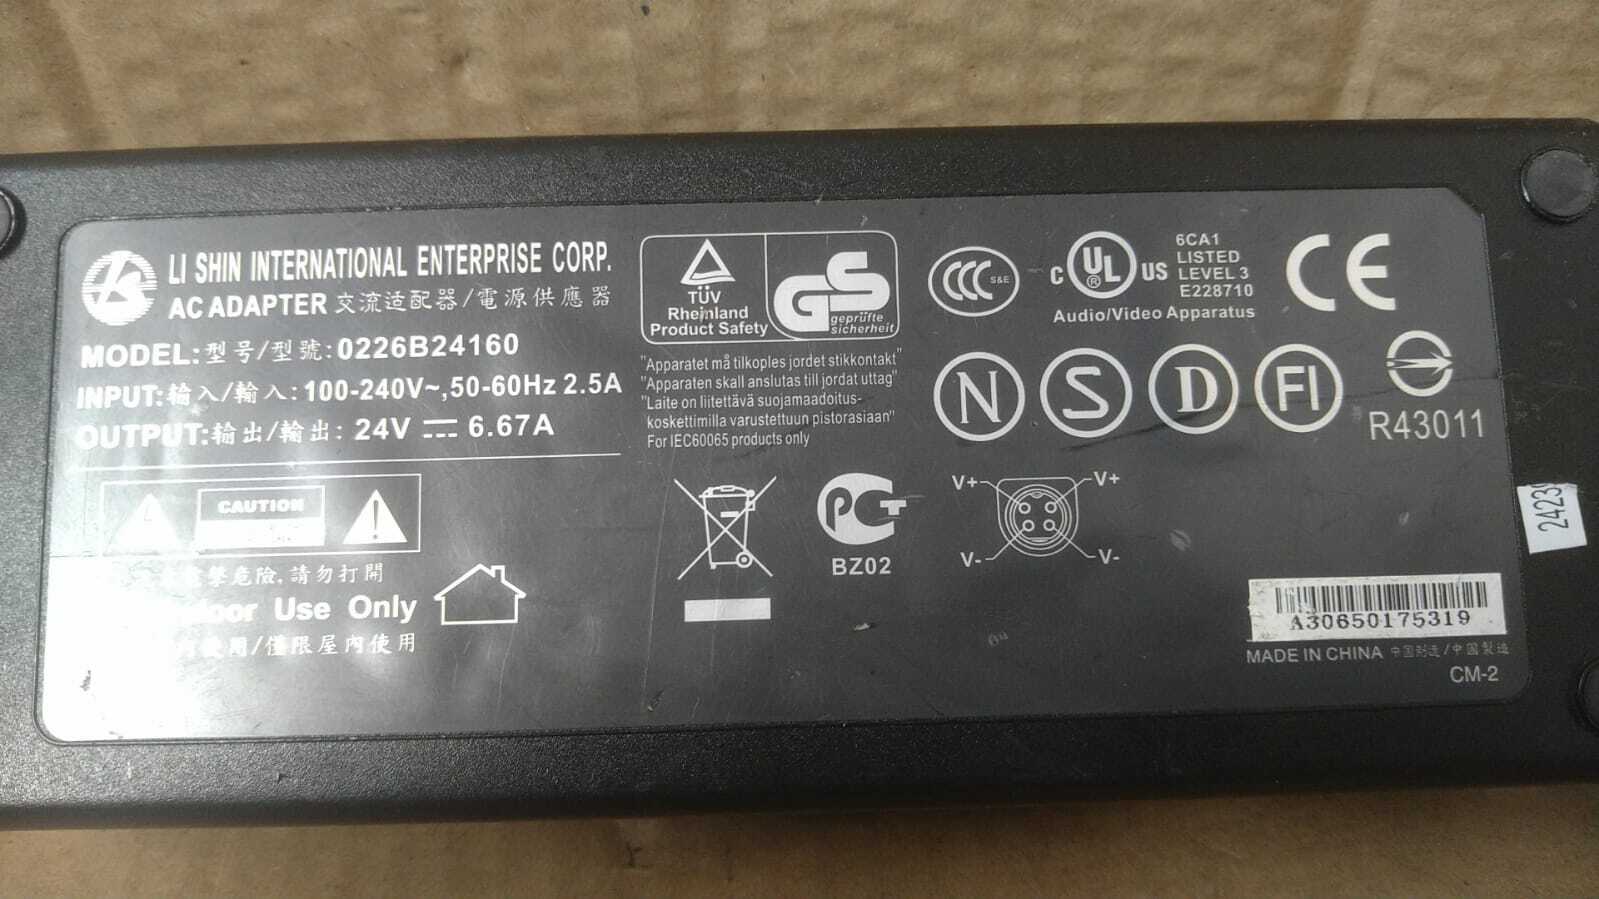 Genuine LI SHIN 0226B24160 - AC/DC ADAPTER 24V = 6.67A - Black Colour: Black Compatible Brand: Universal C